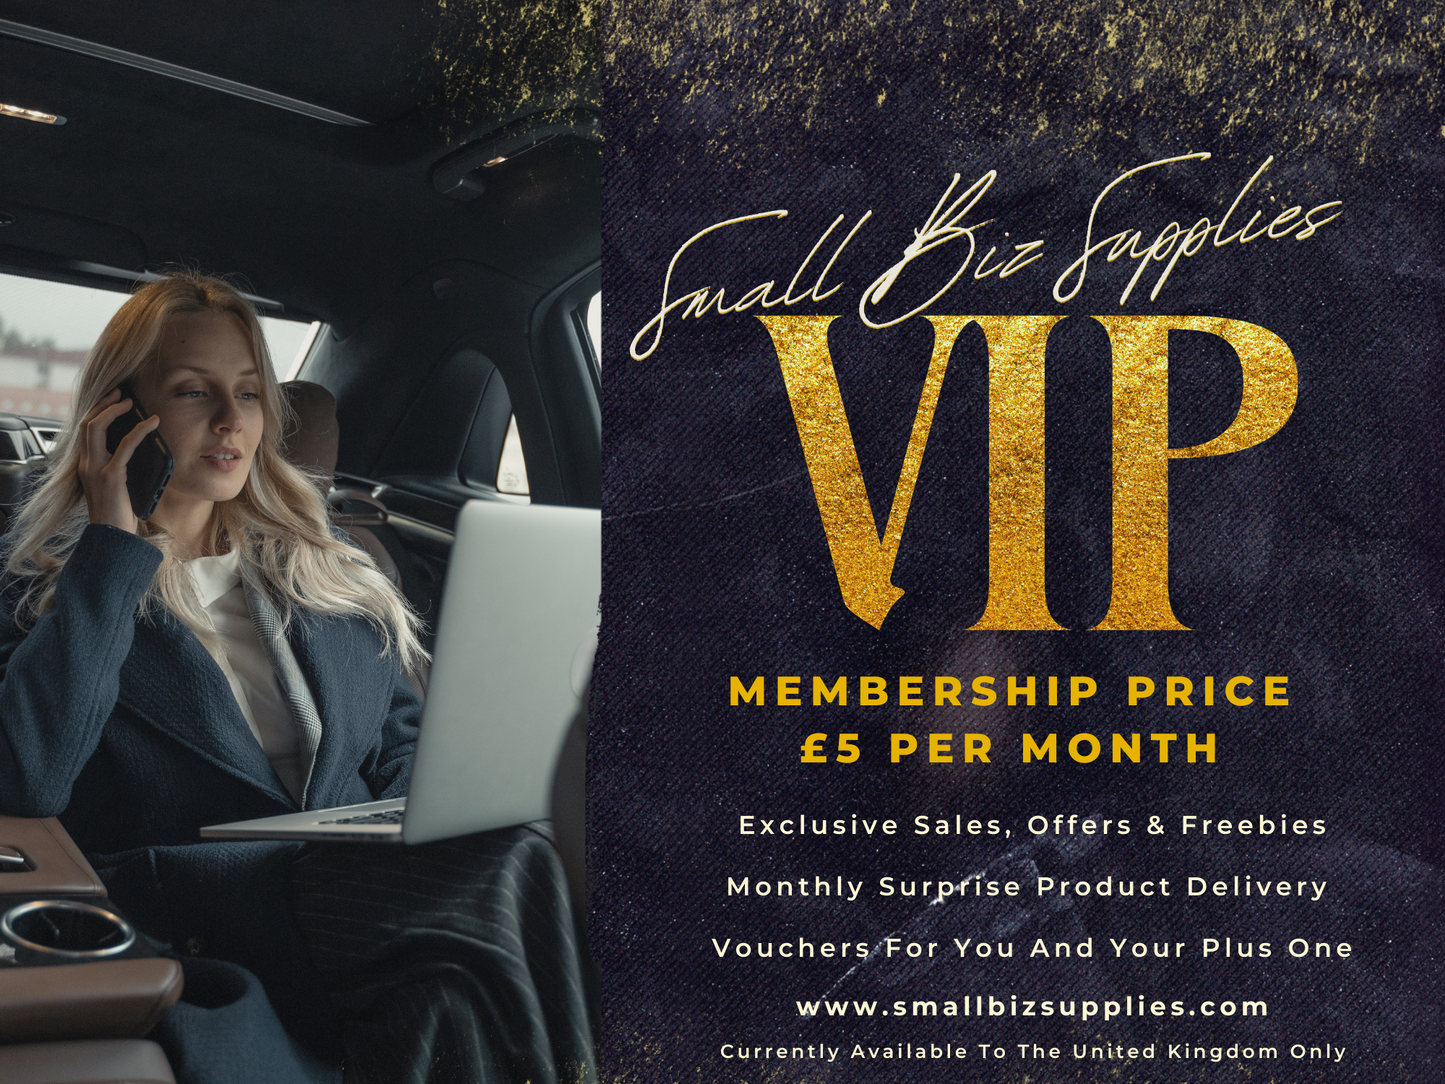 Small Biz Supplies VIP Membership